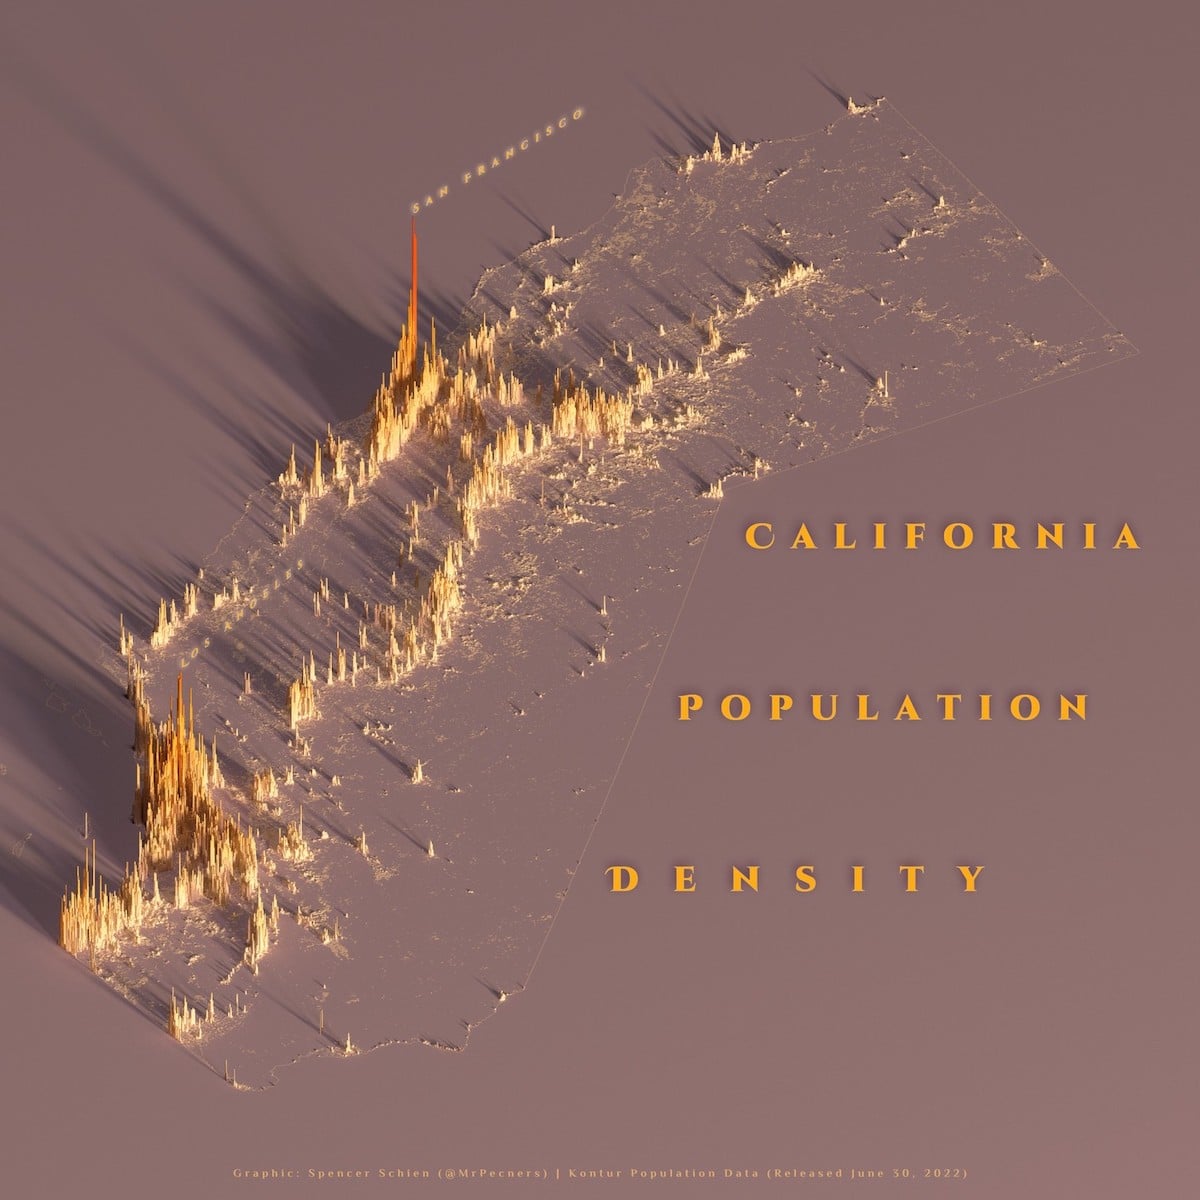 California population density map